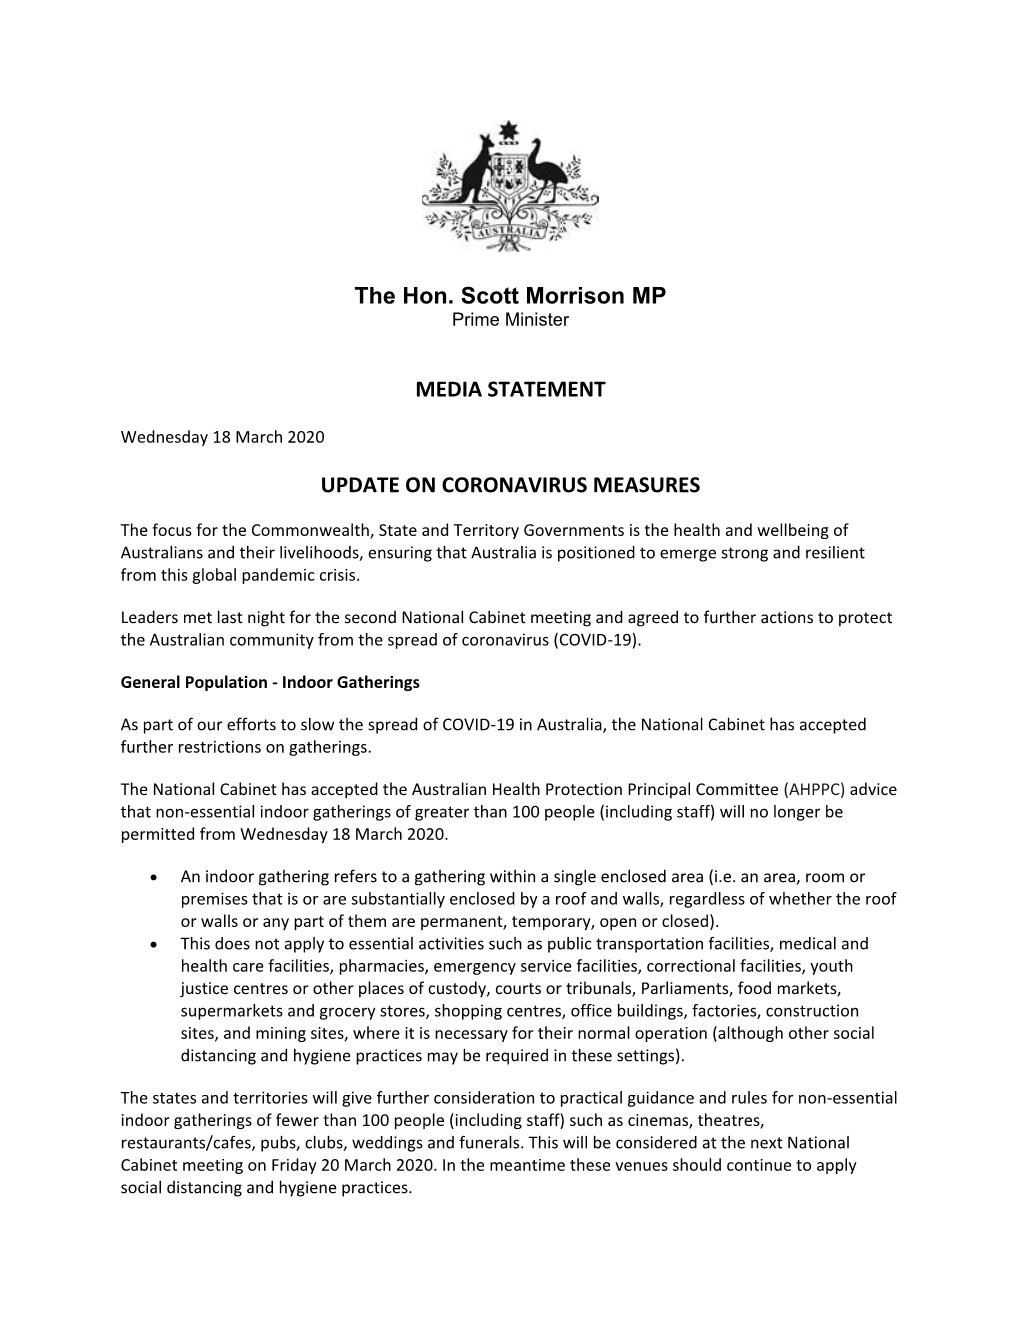 The Hon. Scott Morrison MP MEDIA STATEMENT UPDATE ON